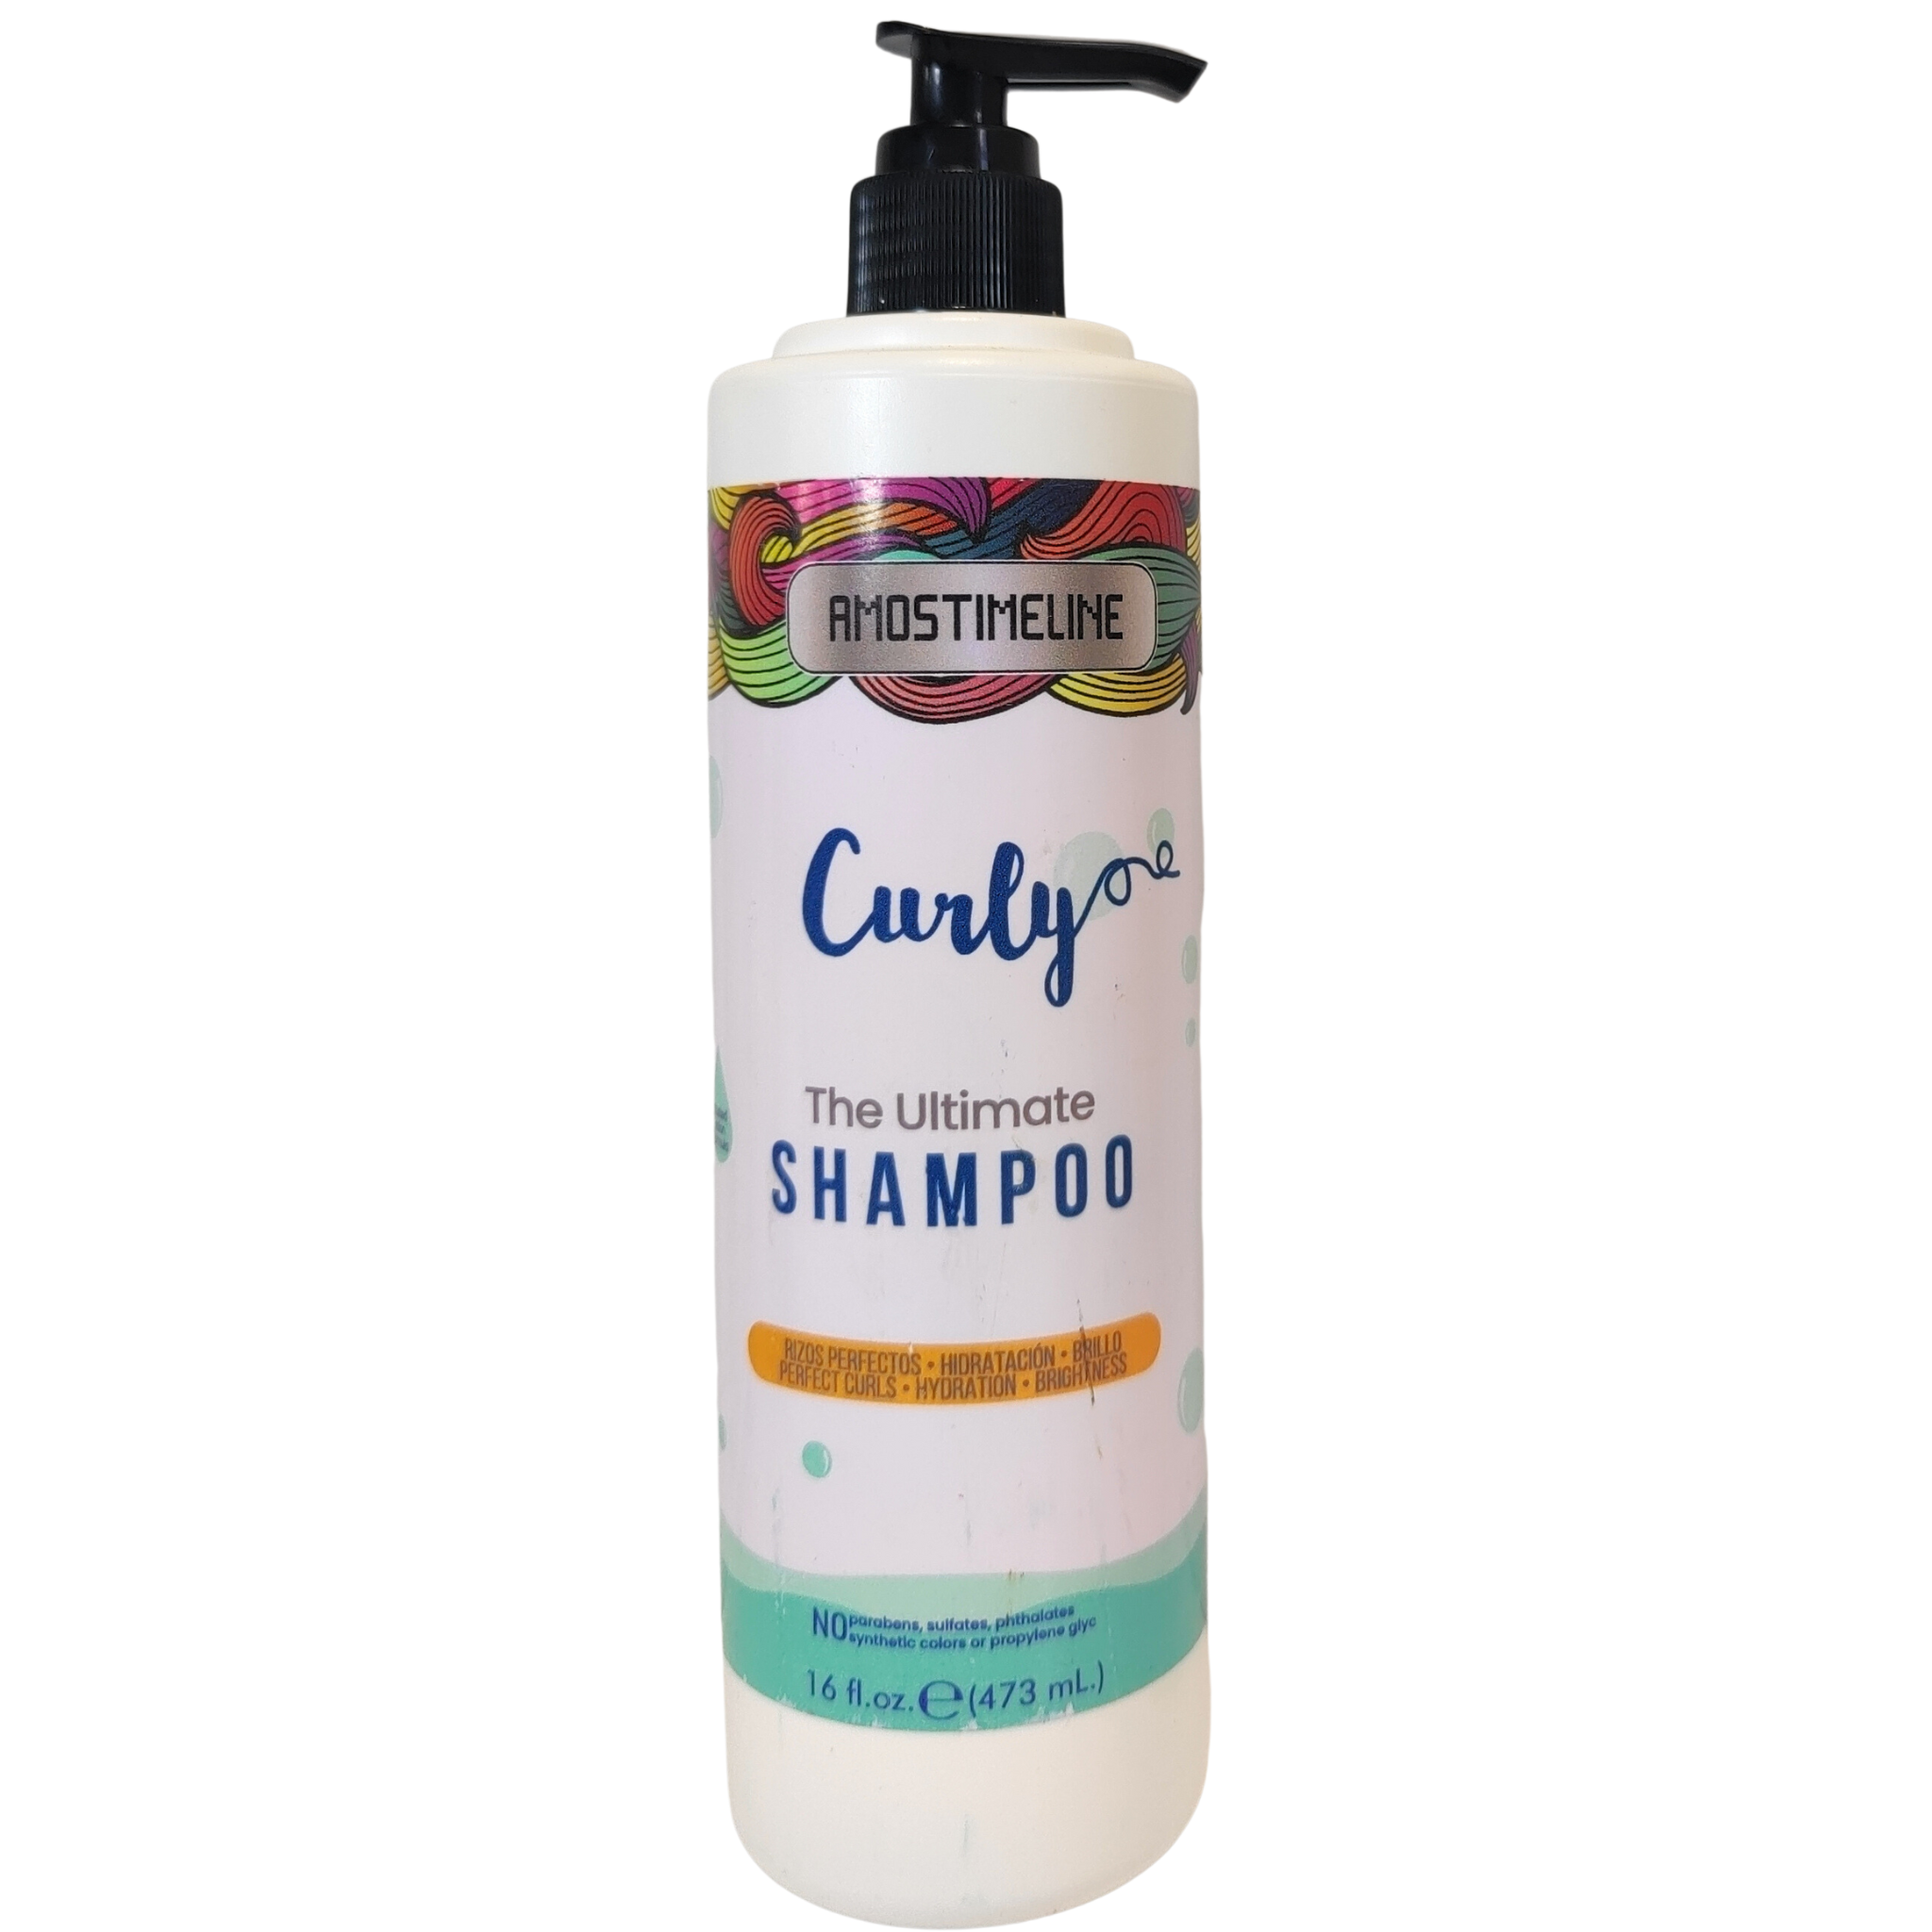 Moisturizing shampoo for curly hair